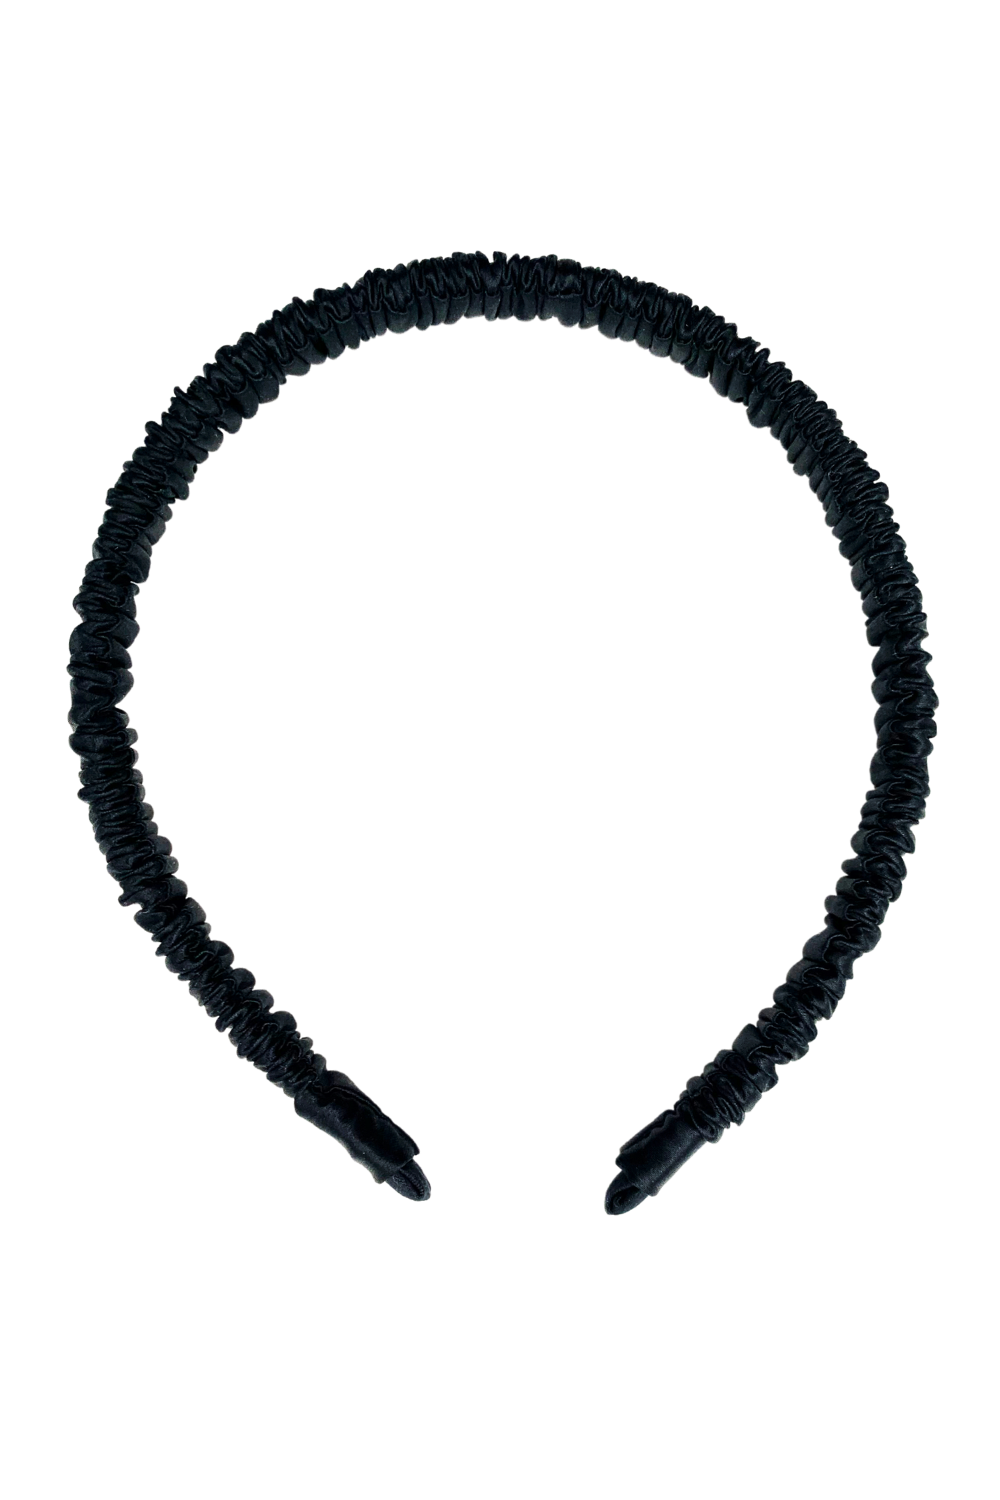 Silk Headband (Thin) - Black - BASK ™